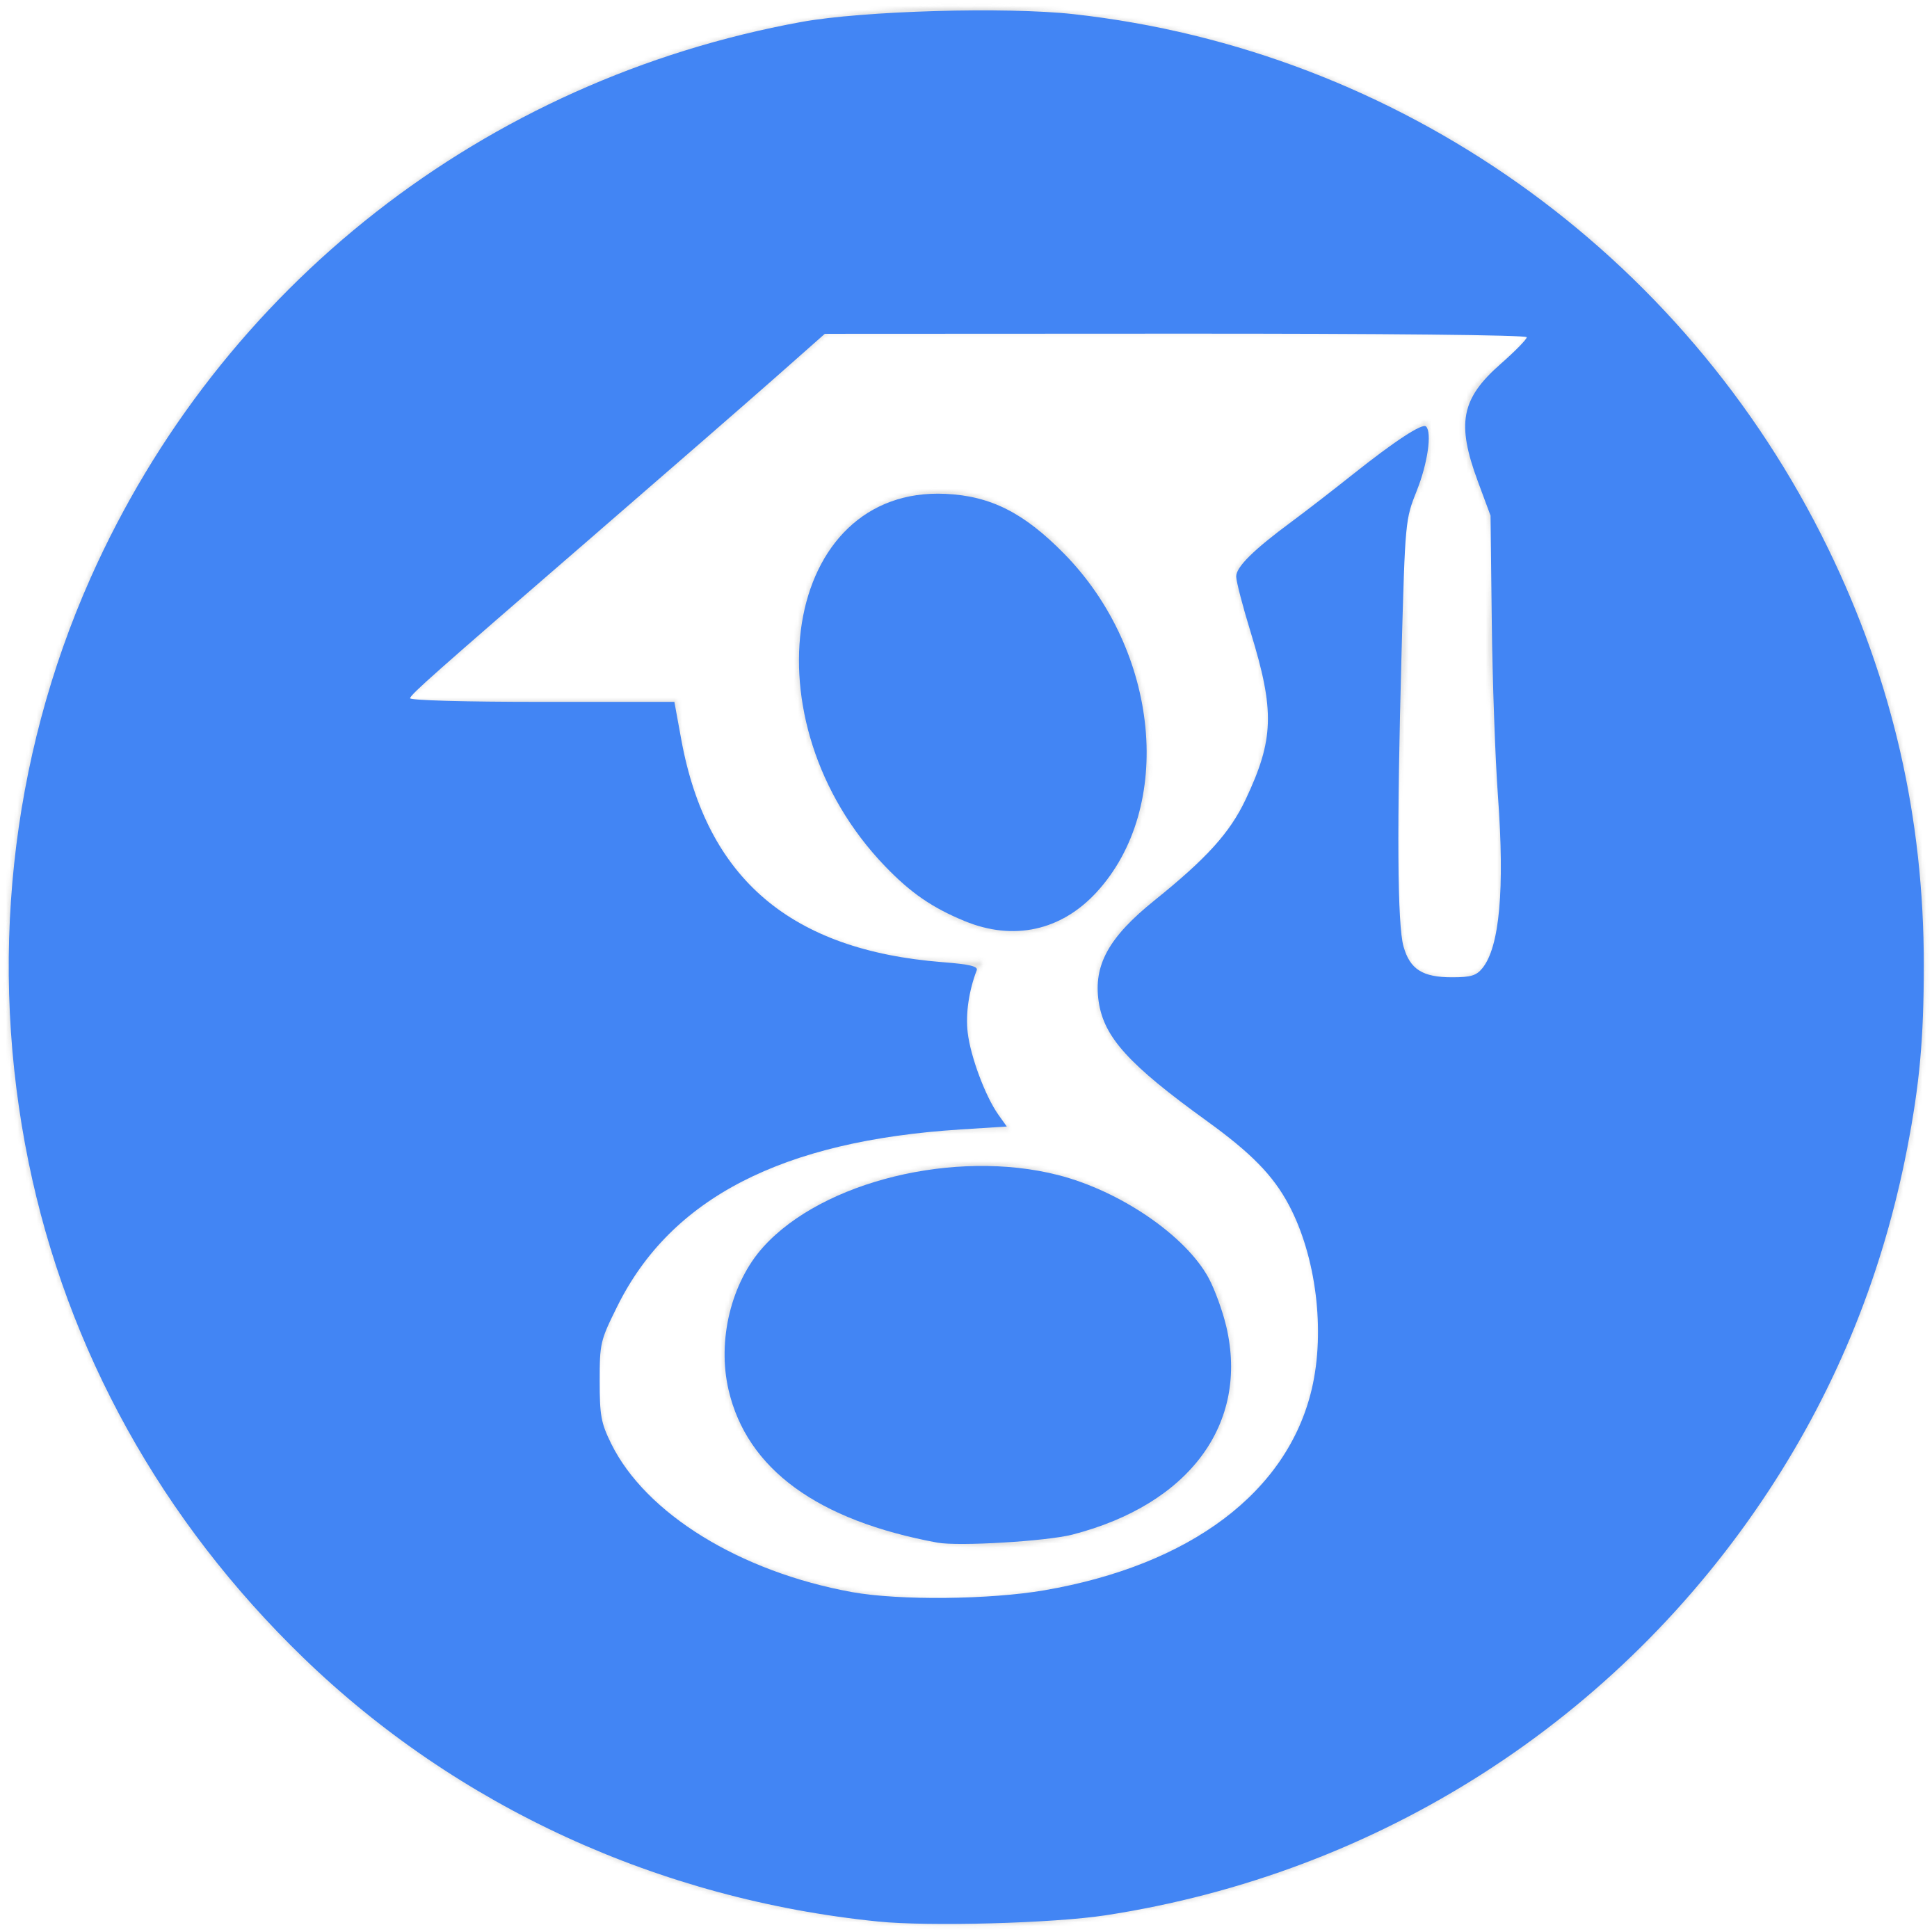 Google Scholar Doctor Science University Philosophy Computer PNG Image